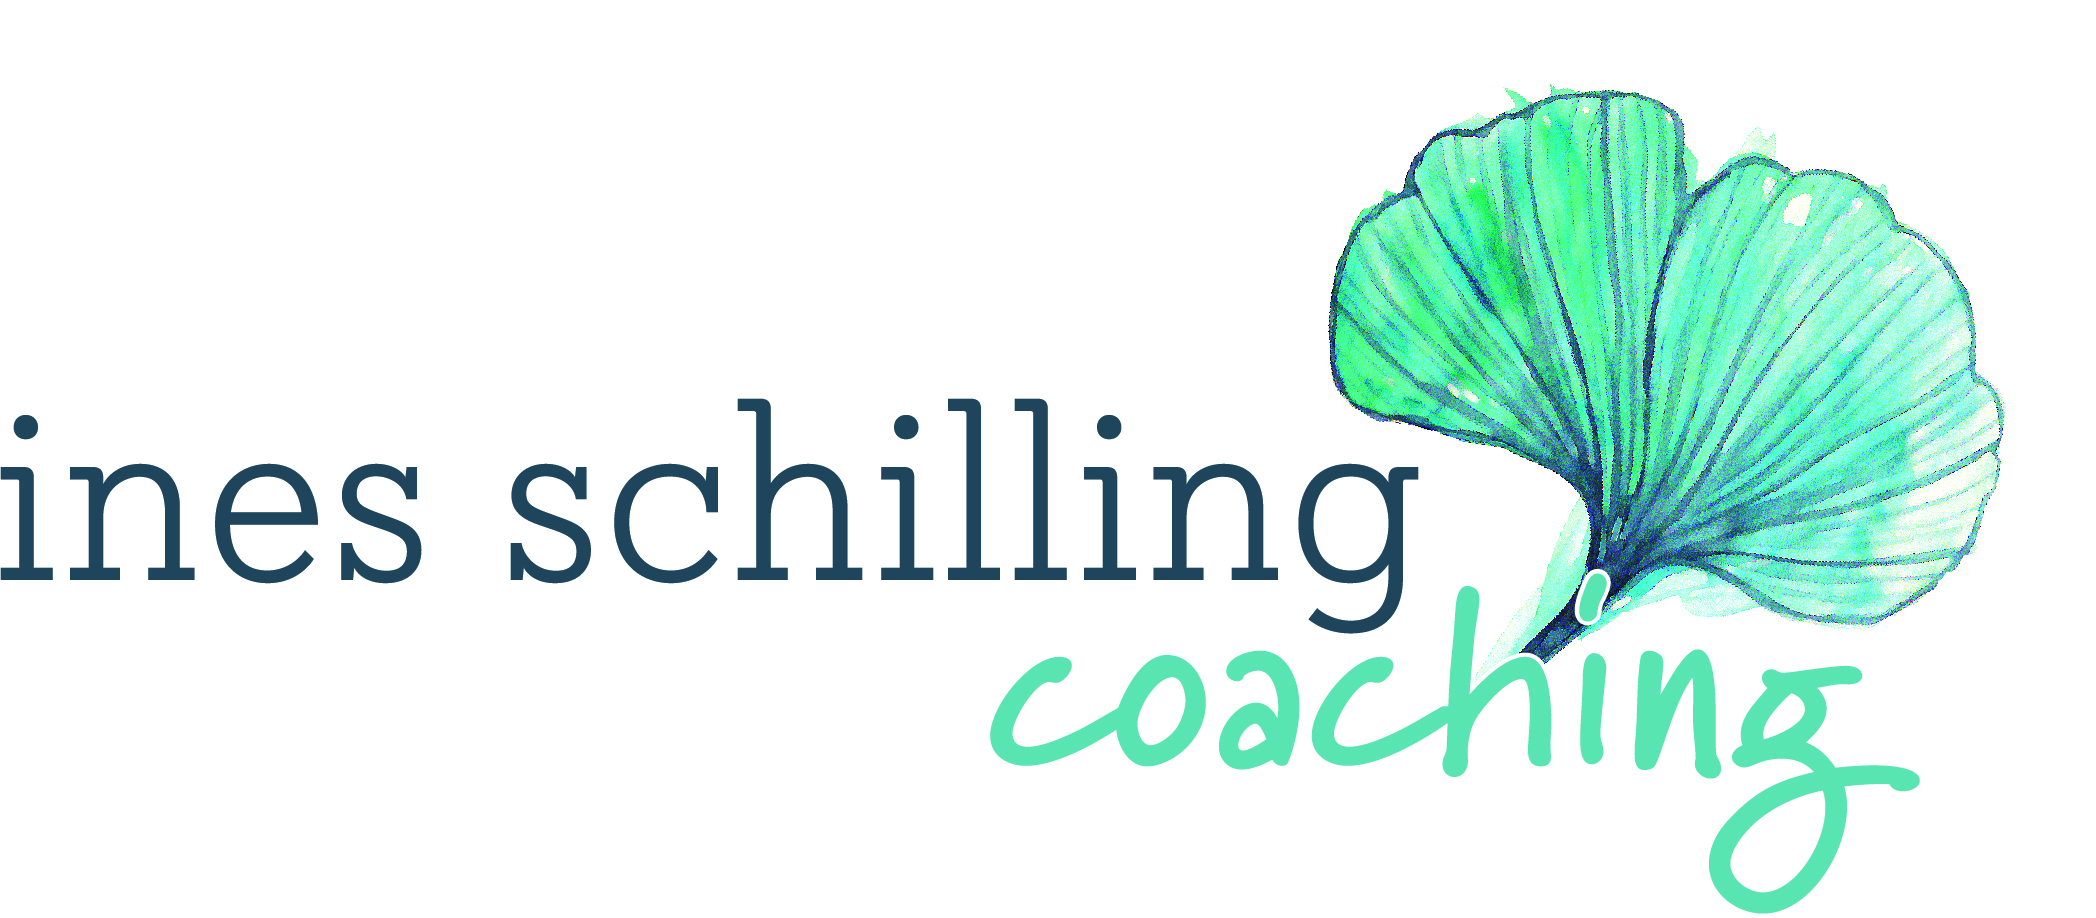 Ines Schilling Coaching